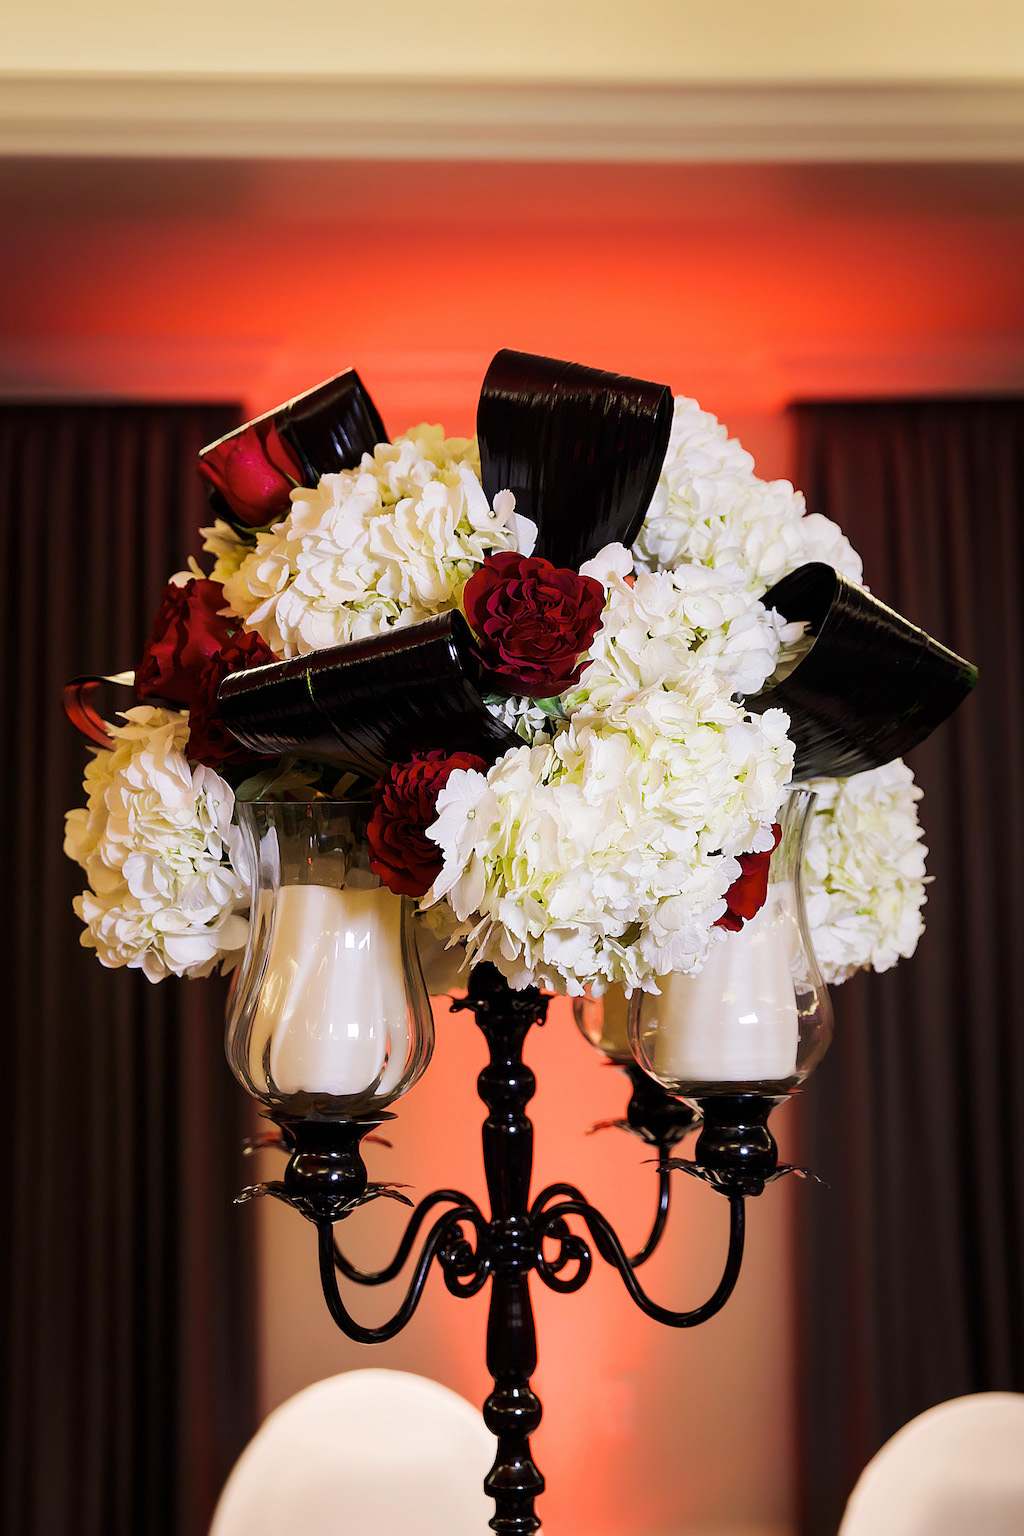 Romantic, Modern Black, White Hydrangeas and Red Rose Floral Centerpiece Arrangement Wedding Reception Decor, Tall Black Candelabra